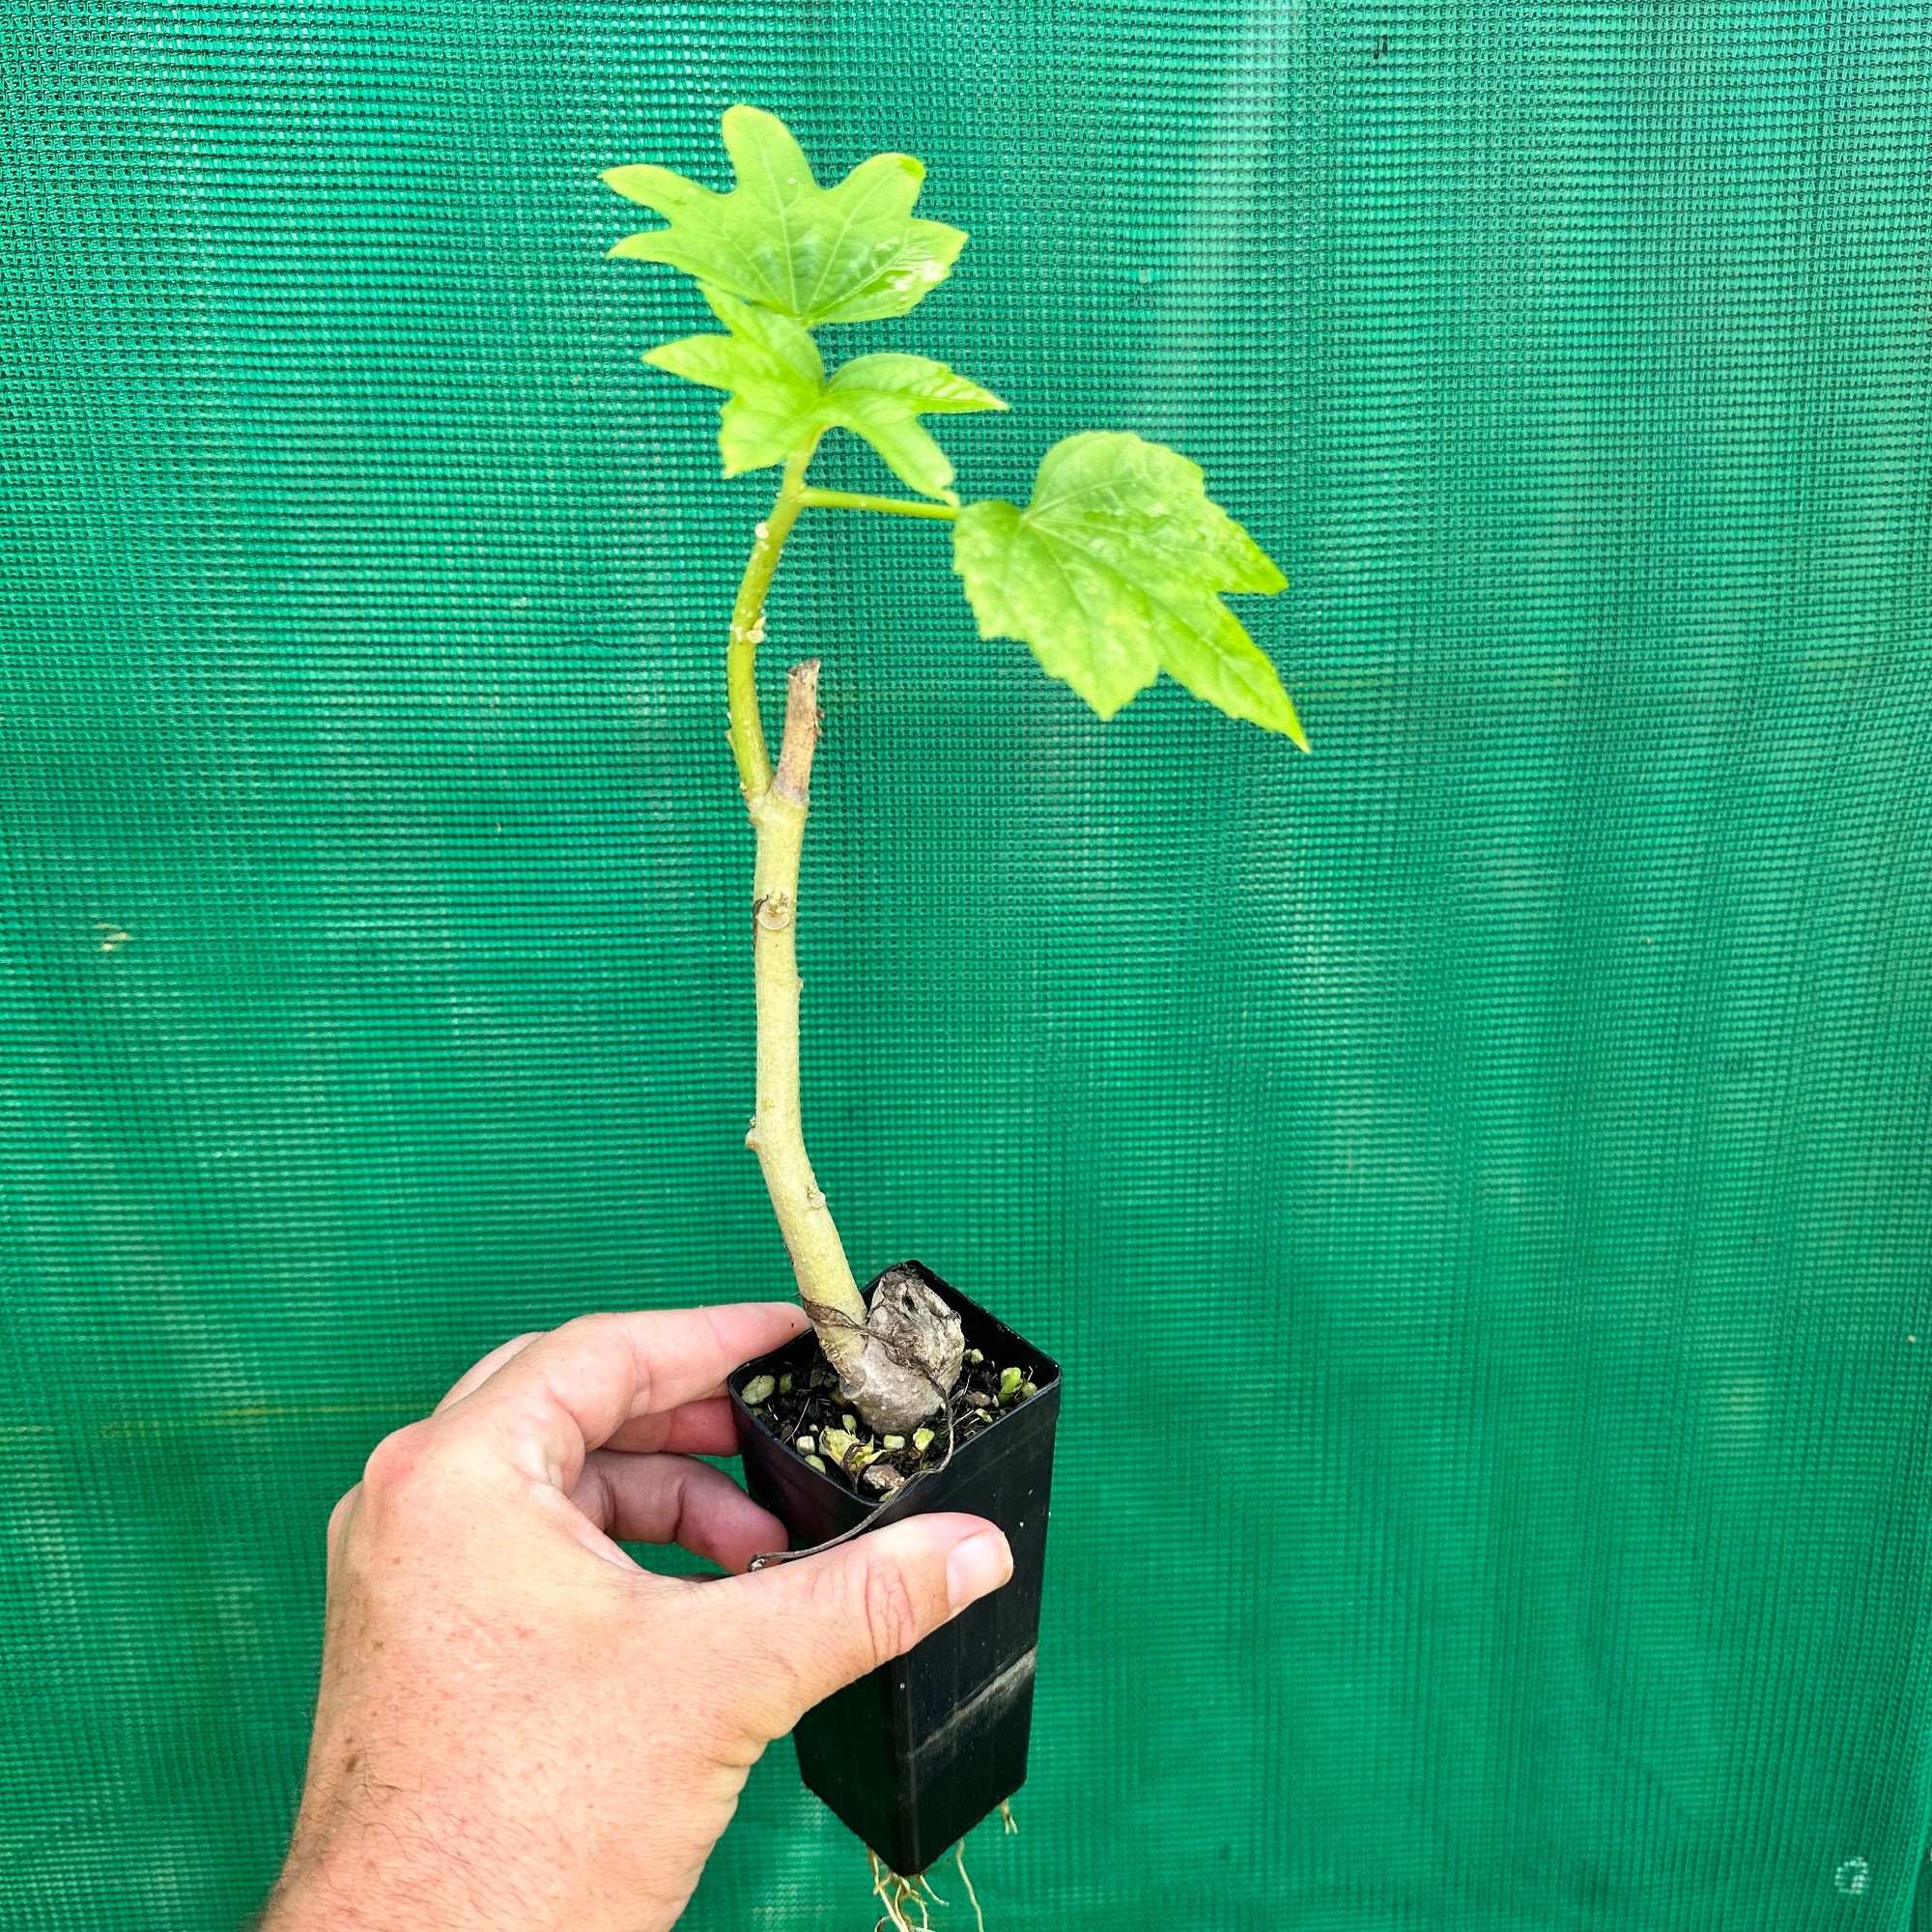 Aibika Hibiscus Spinach - Abelmoschus manihot NEW